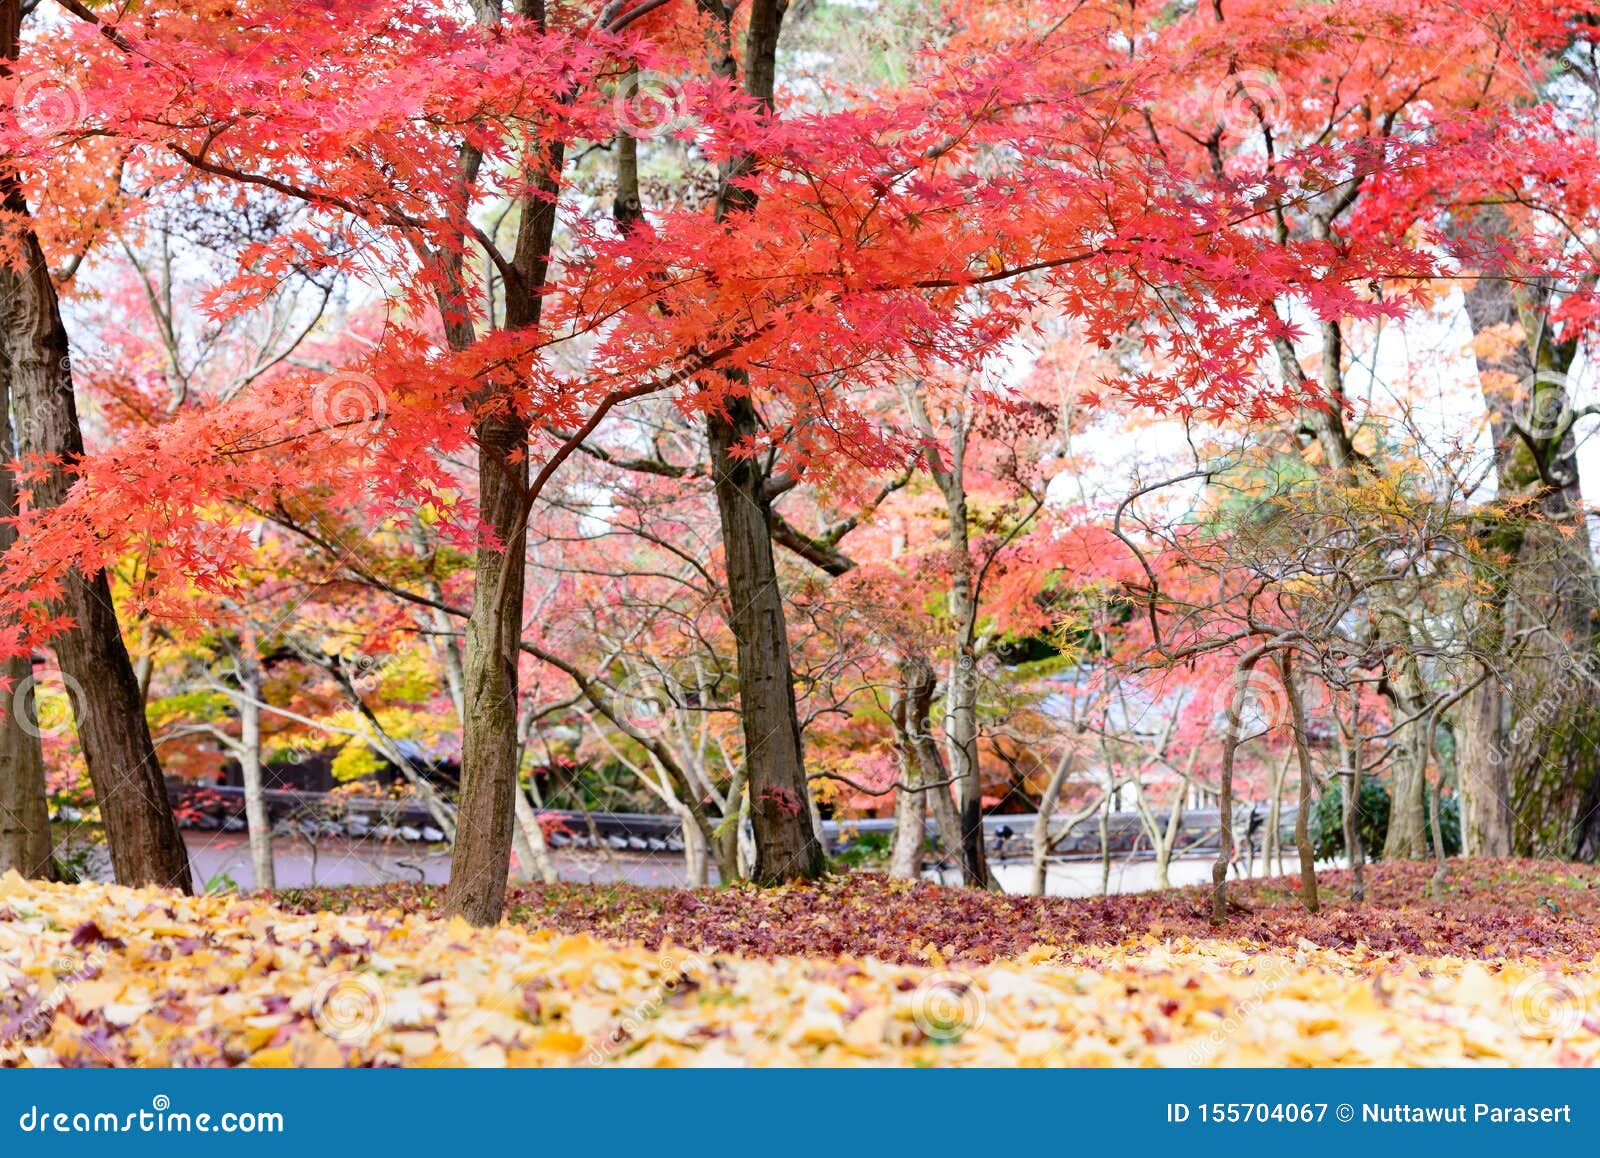 Japan Red Maple Leaves In Japanese Garden Eikando Temple Kyoto Japan Autumn Season Stock Image Image Of Scene Temple